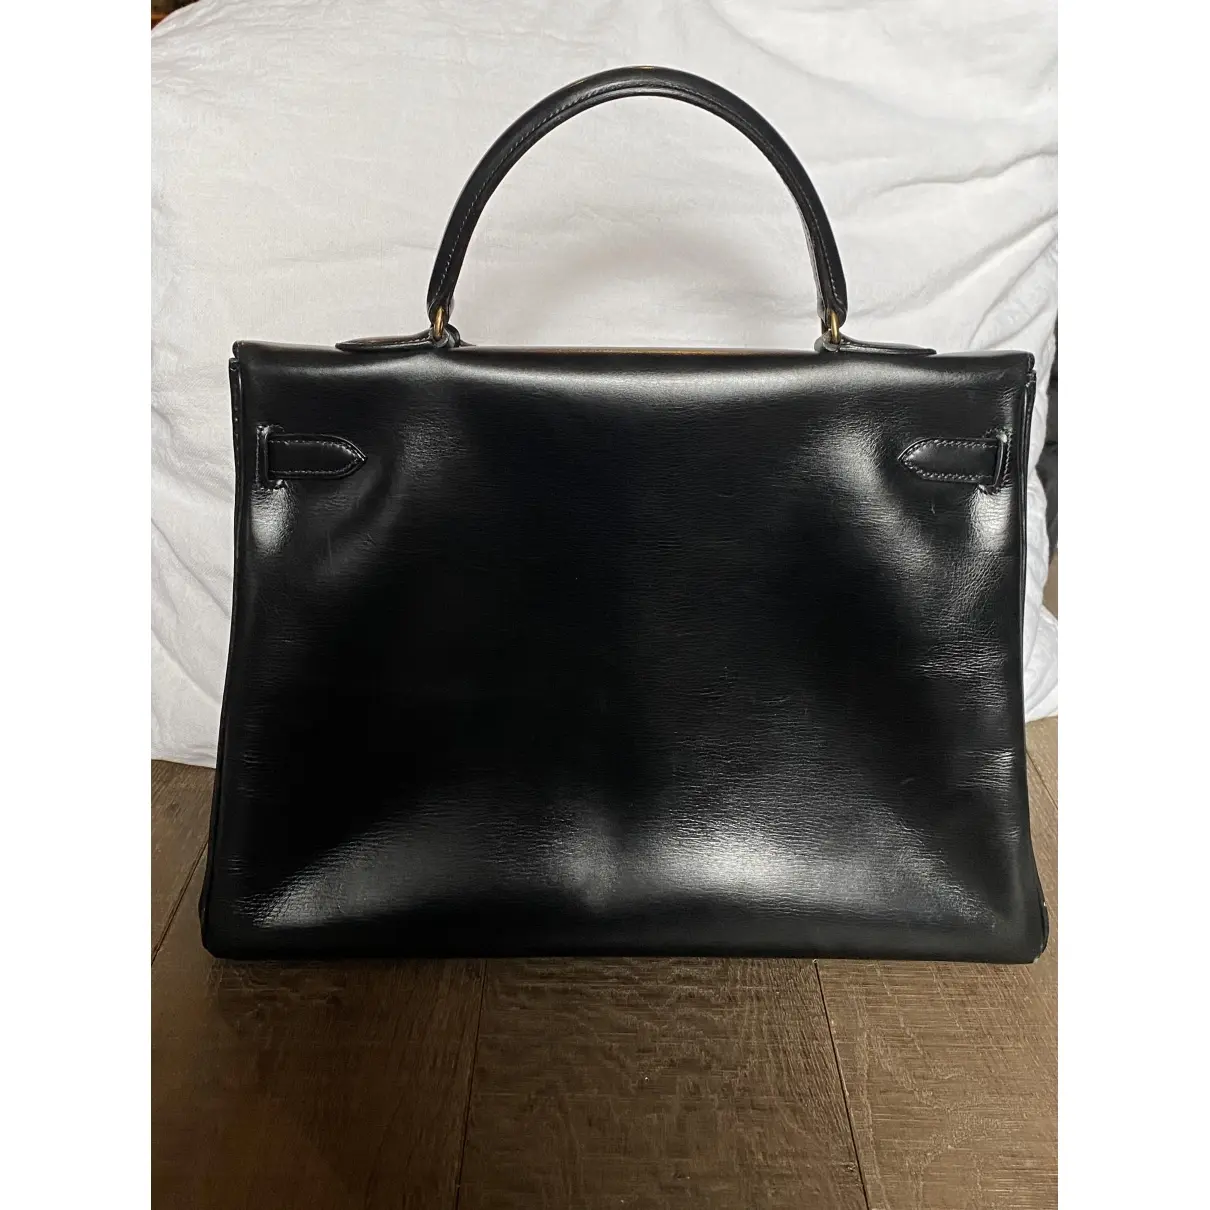 Buy Hermès Kelly 35 leather handbag online - Vintage